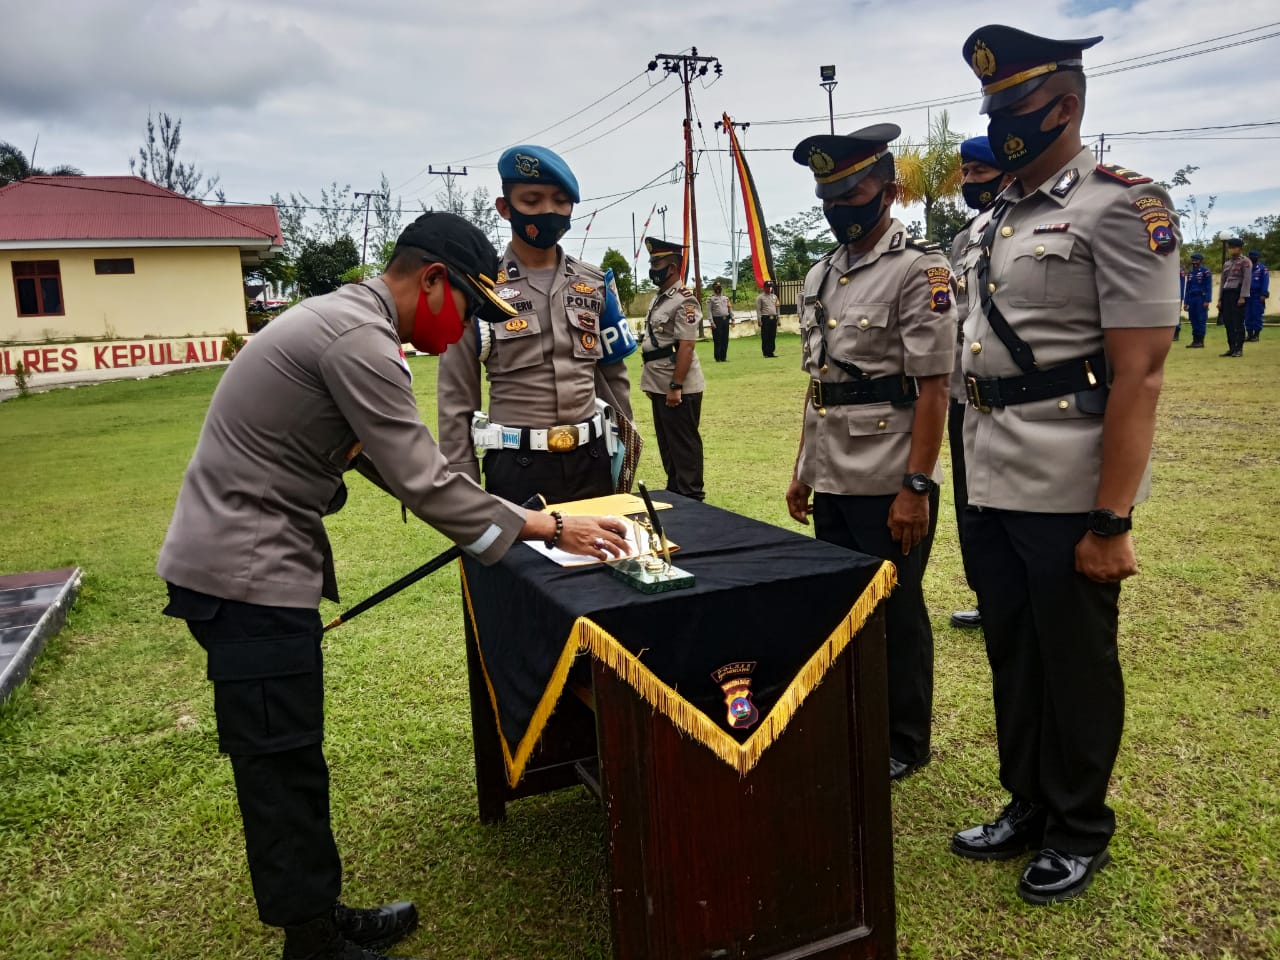 Kapolres Kepulauan Mentawai AKBP Dody Prawiranegara SIK,MH memimpin  upacara pelantikan dan sertijab Kapolsek Muara Sibeurut, Kasat Narkoba serta Kasat Pol Air Mentawai, Kamis  (13/08/2020). 